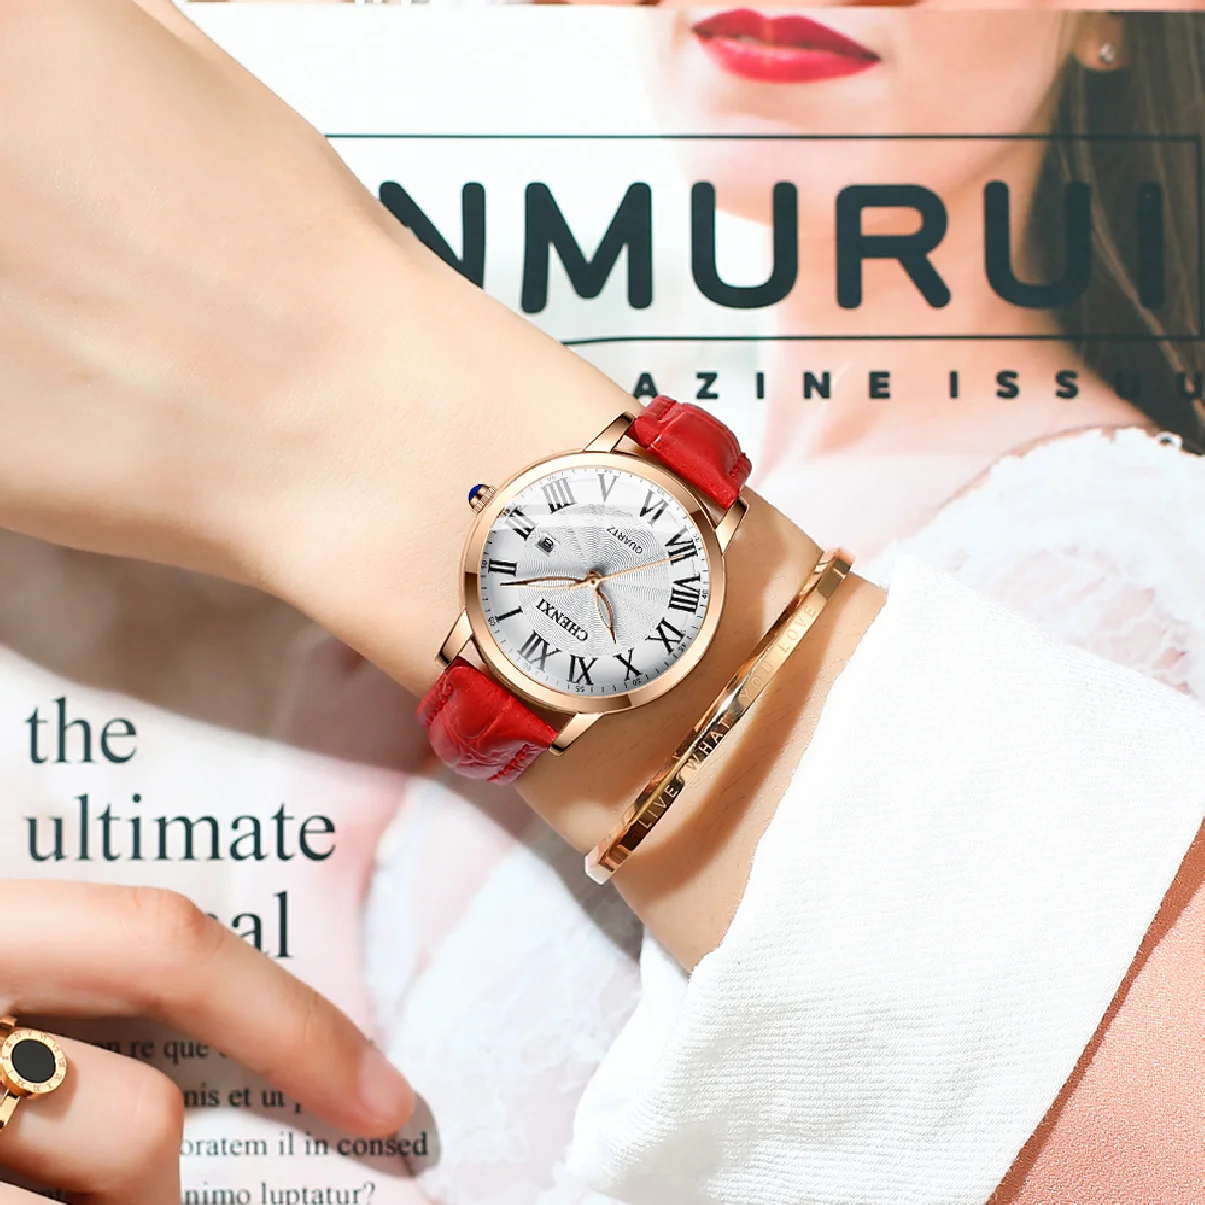 CHENXI New Women Watch Top Luxury Brand Fashion Casual Ladies Watches Leather Quartz Waterproof Wristwatches Relogio Feminino enlarge